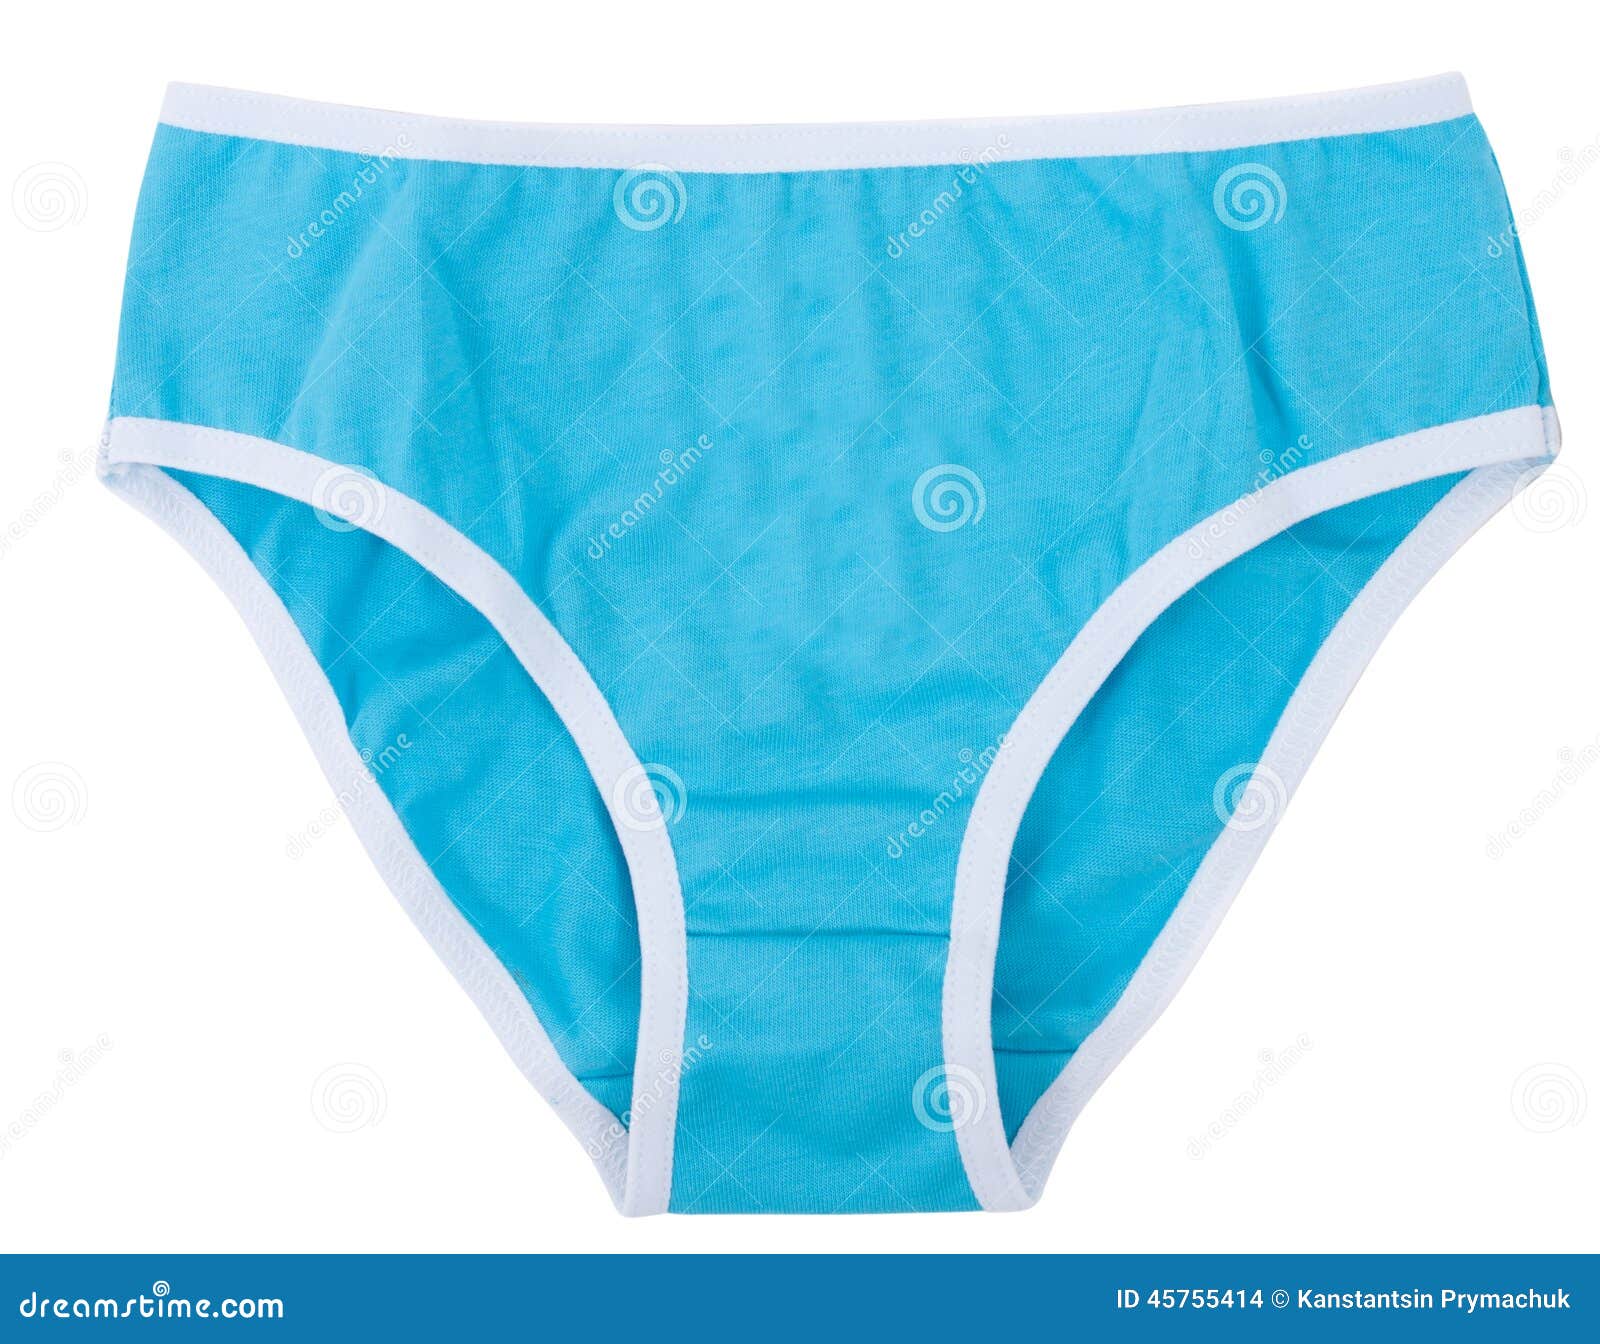 Women S Panties Isolated on White Background. Stock Photo - Image of ...